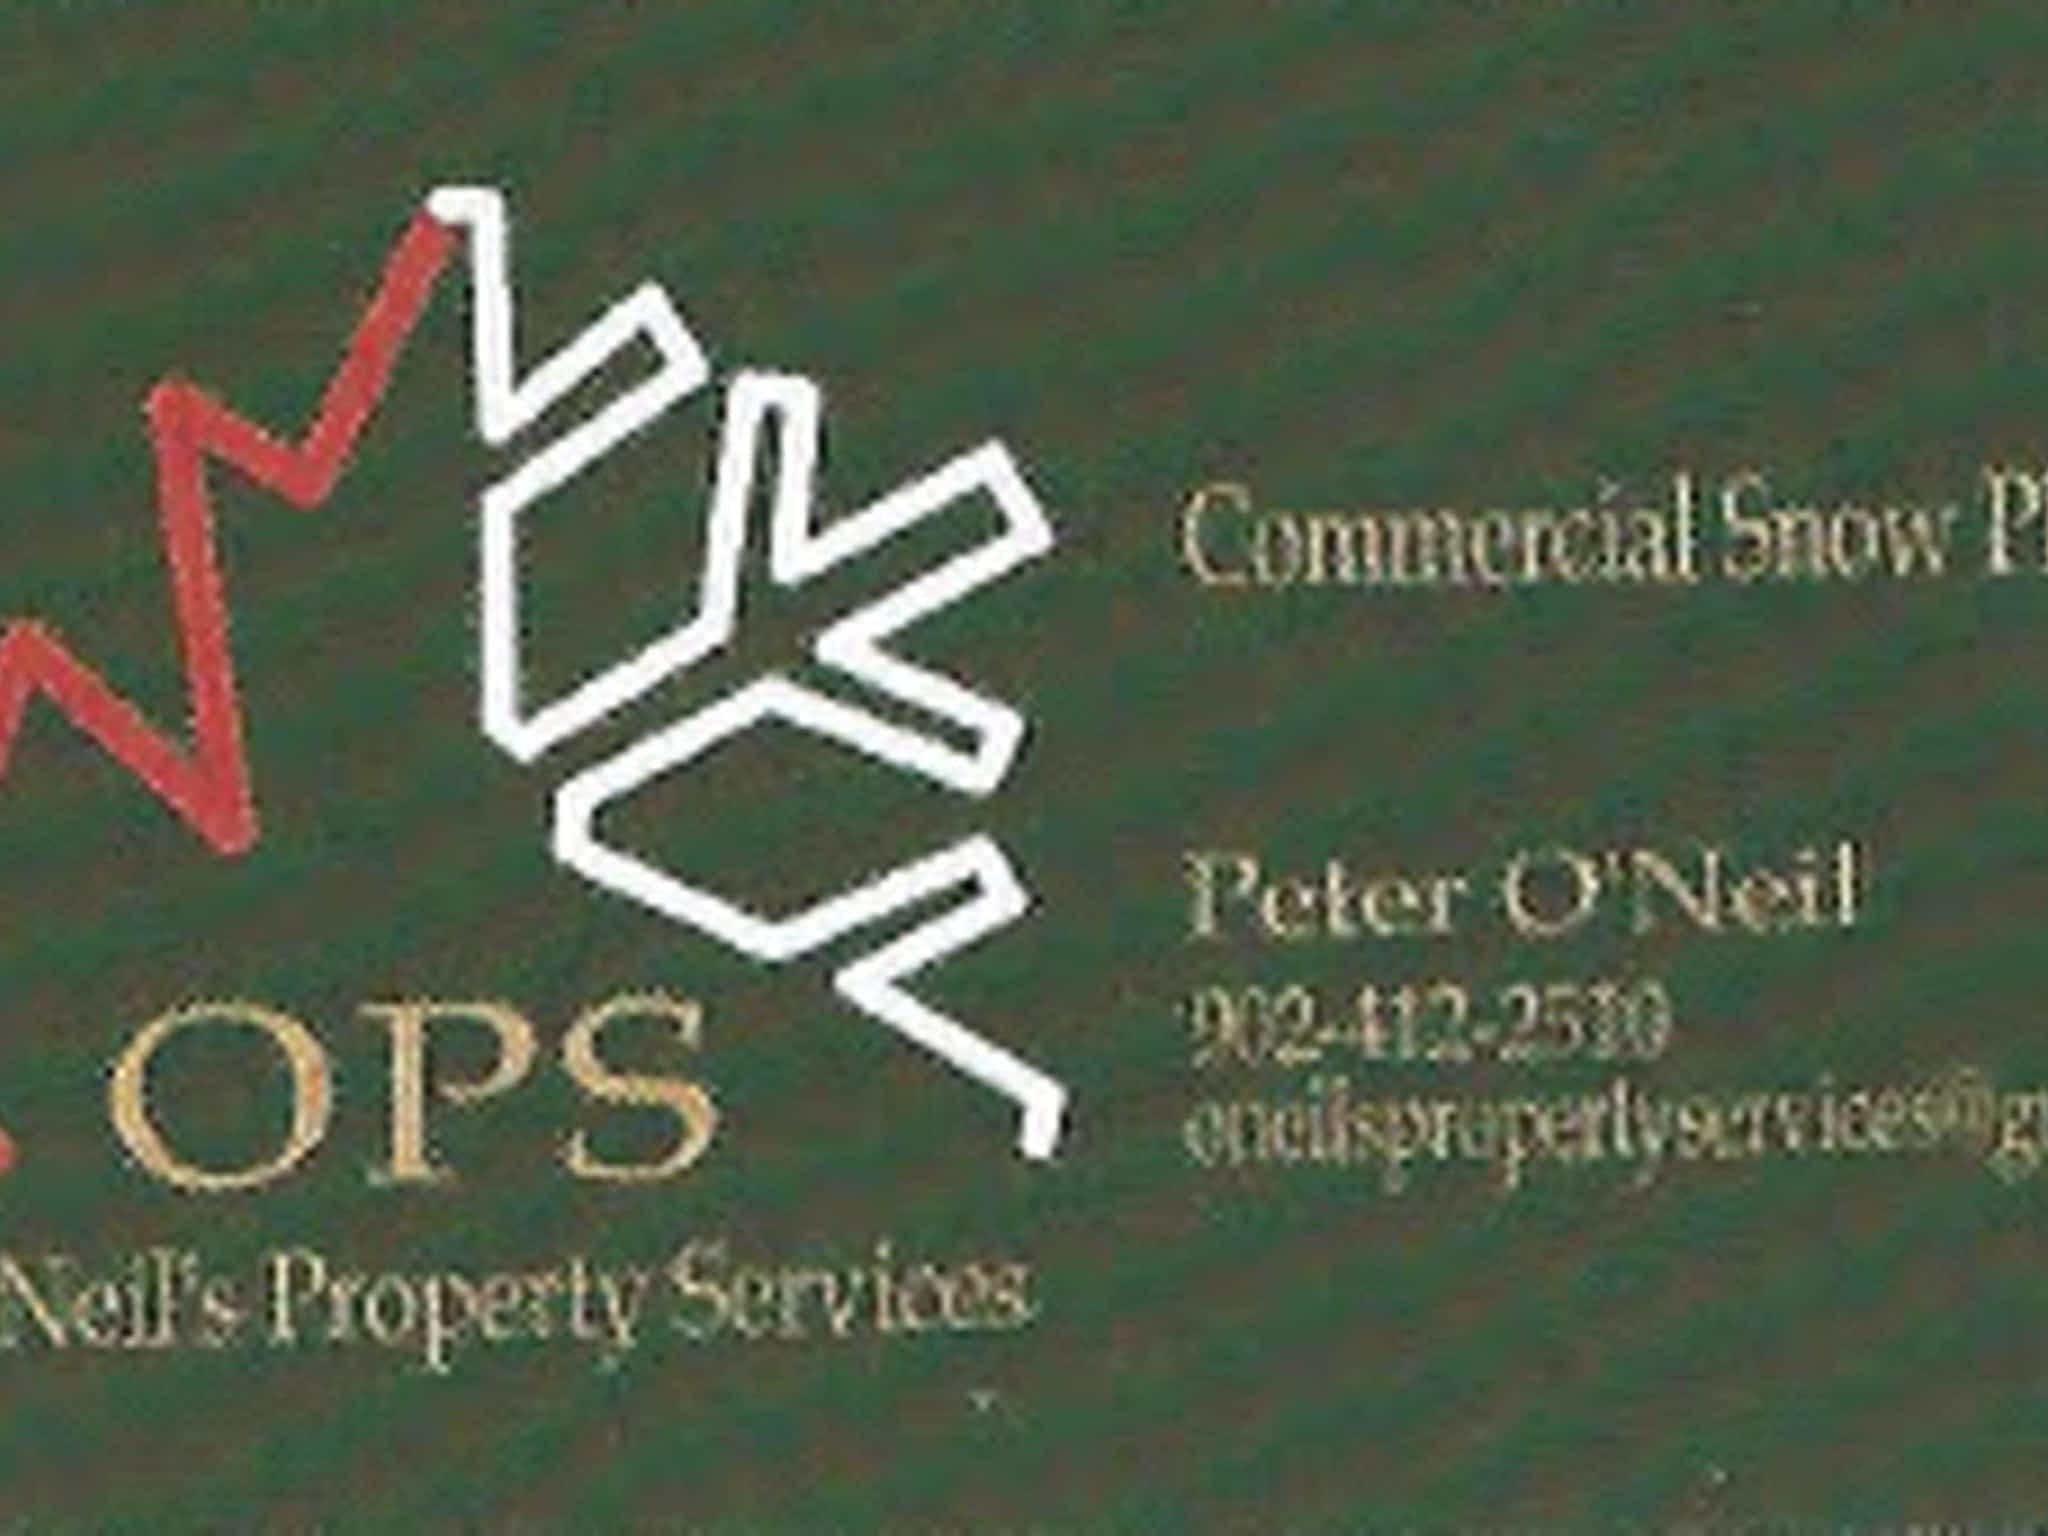 photo O'neil's Property Services